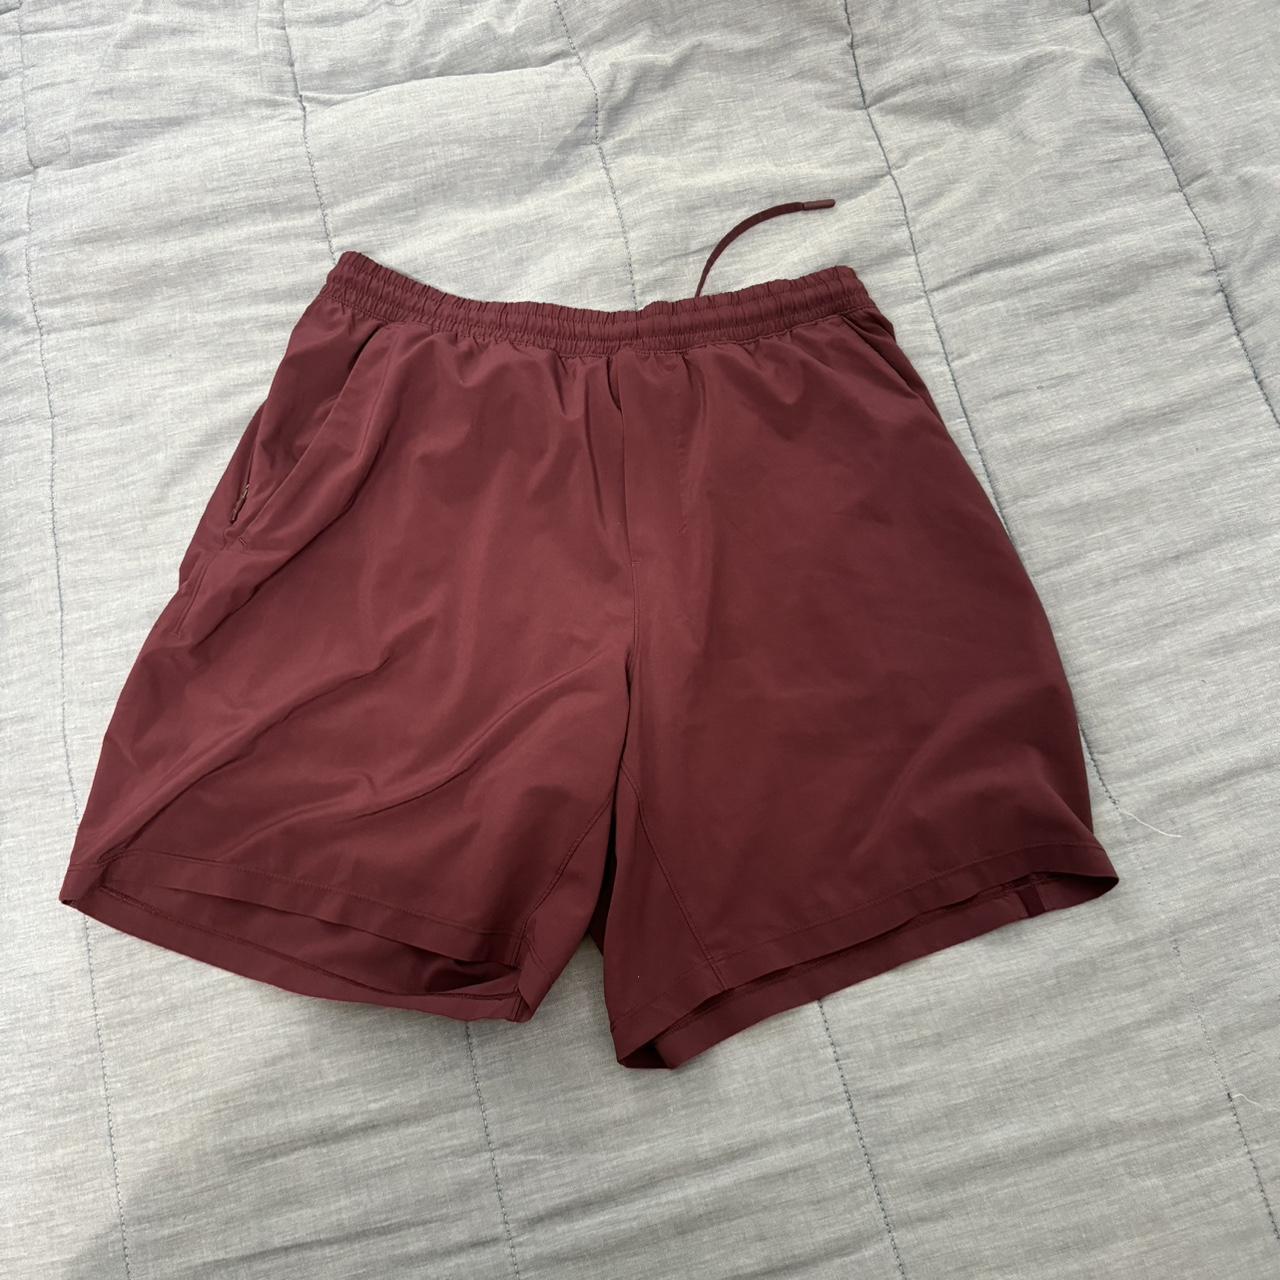 Size medium lulu lemon shorts in maroon - Depop